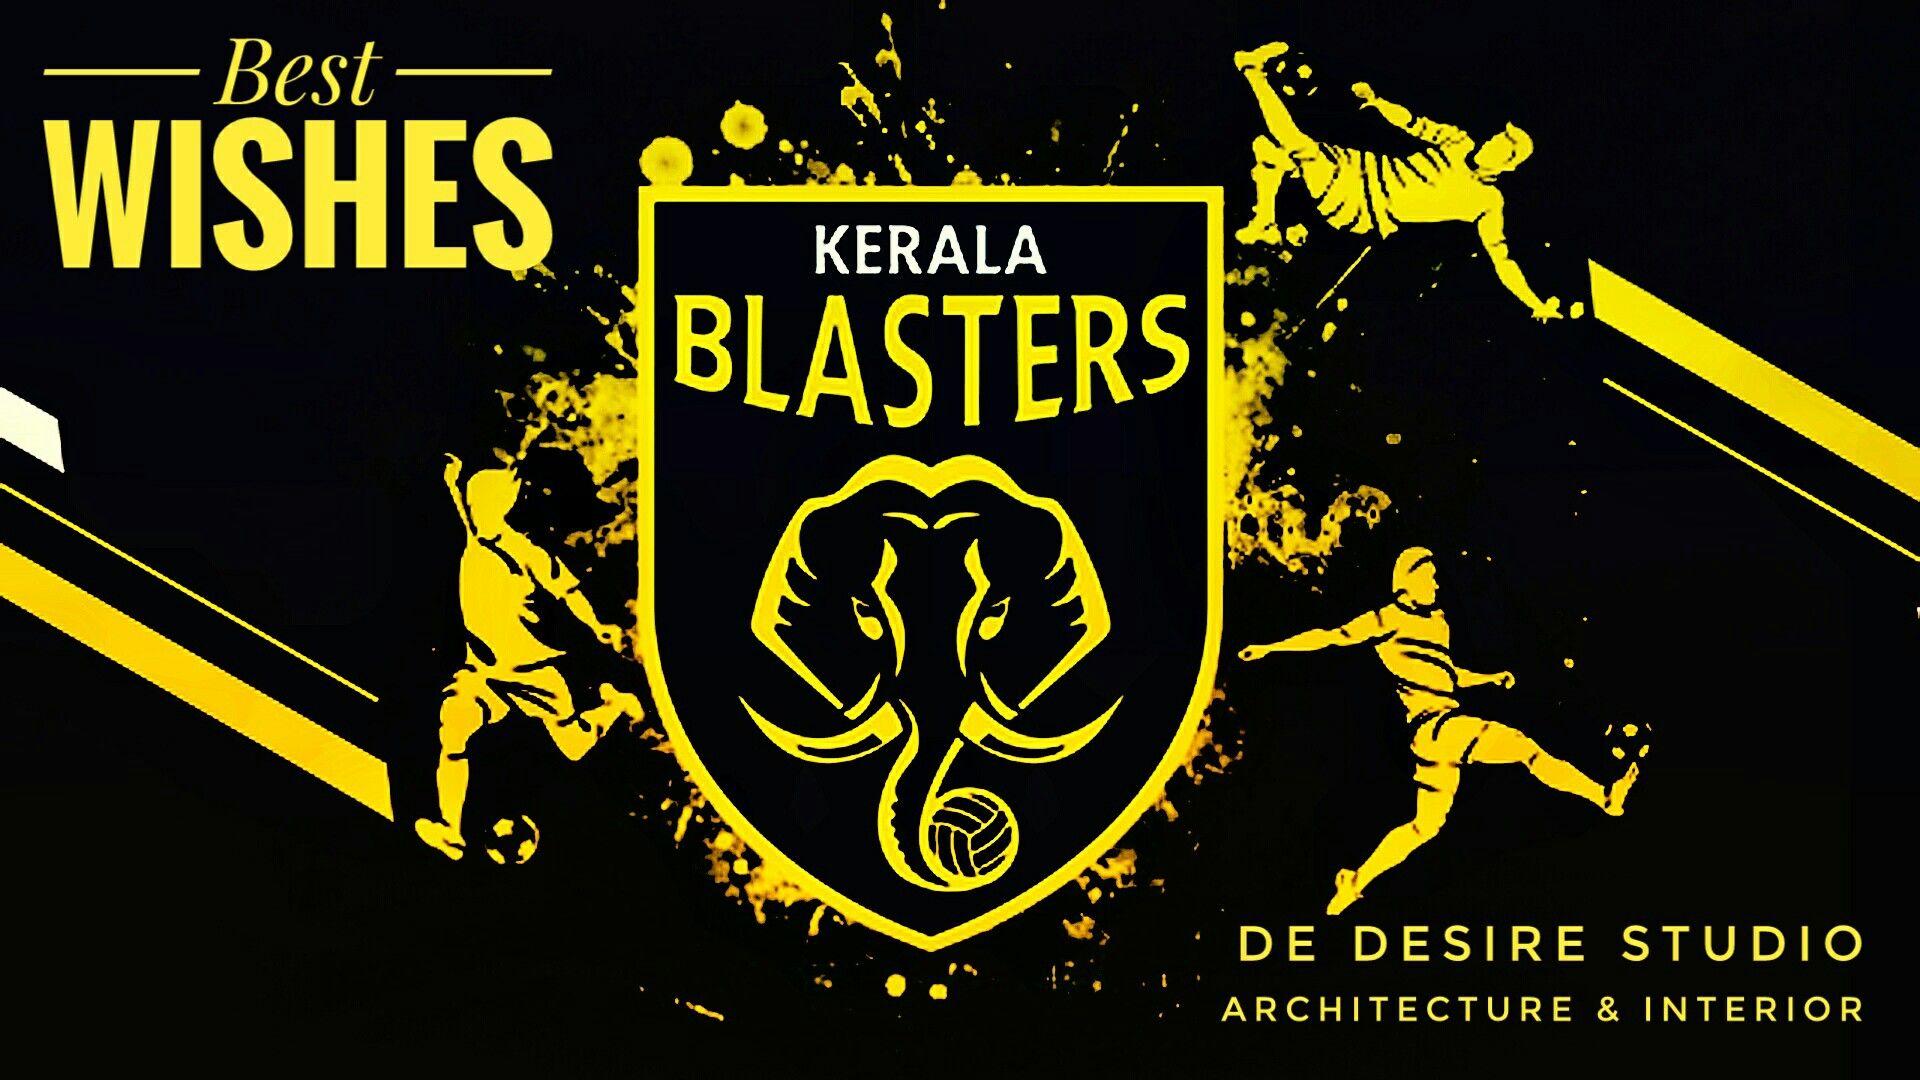 sanoj vs on Twitter KeralaBlasters My wallpaper designs on ma mobile  KBFC Manjappada httpstcoWAo8TpHNrl  Twitter